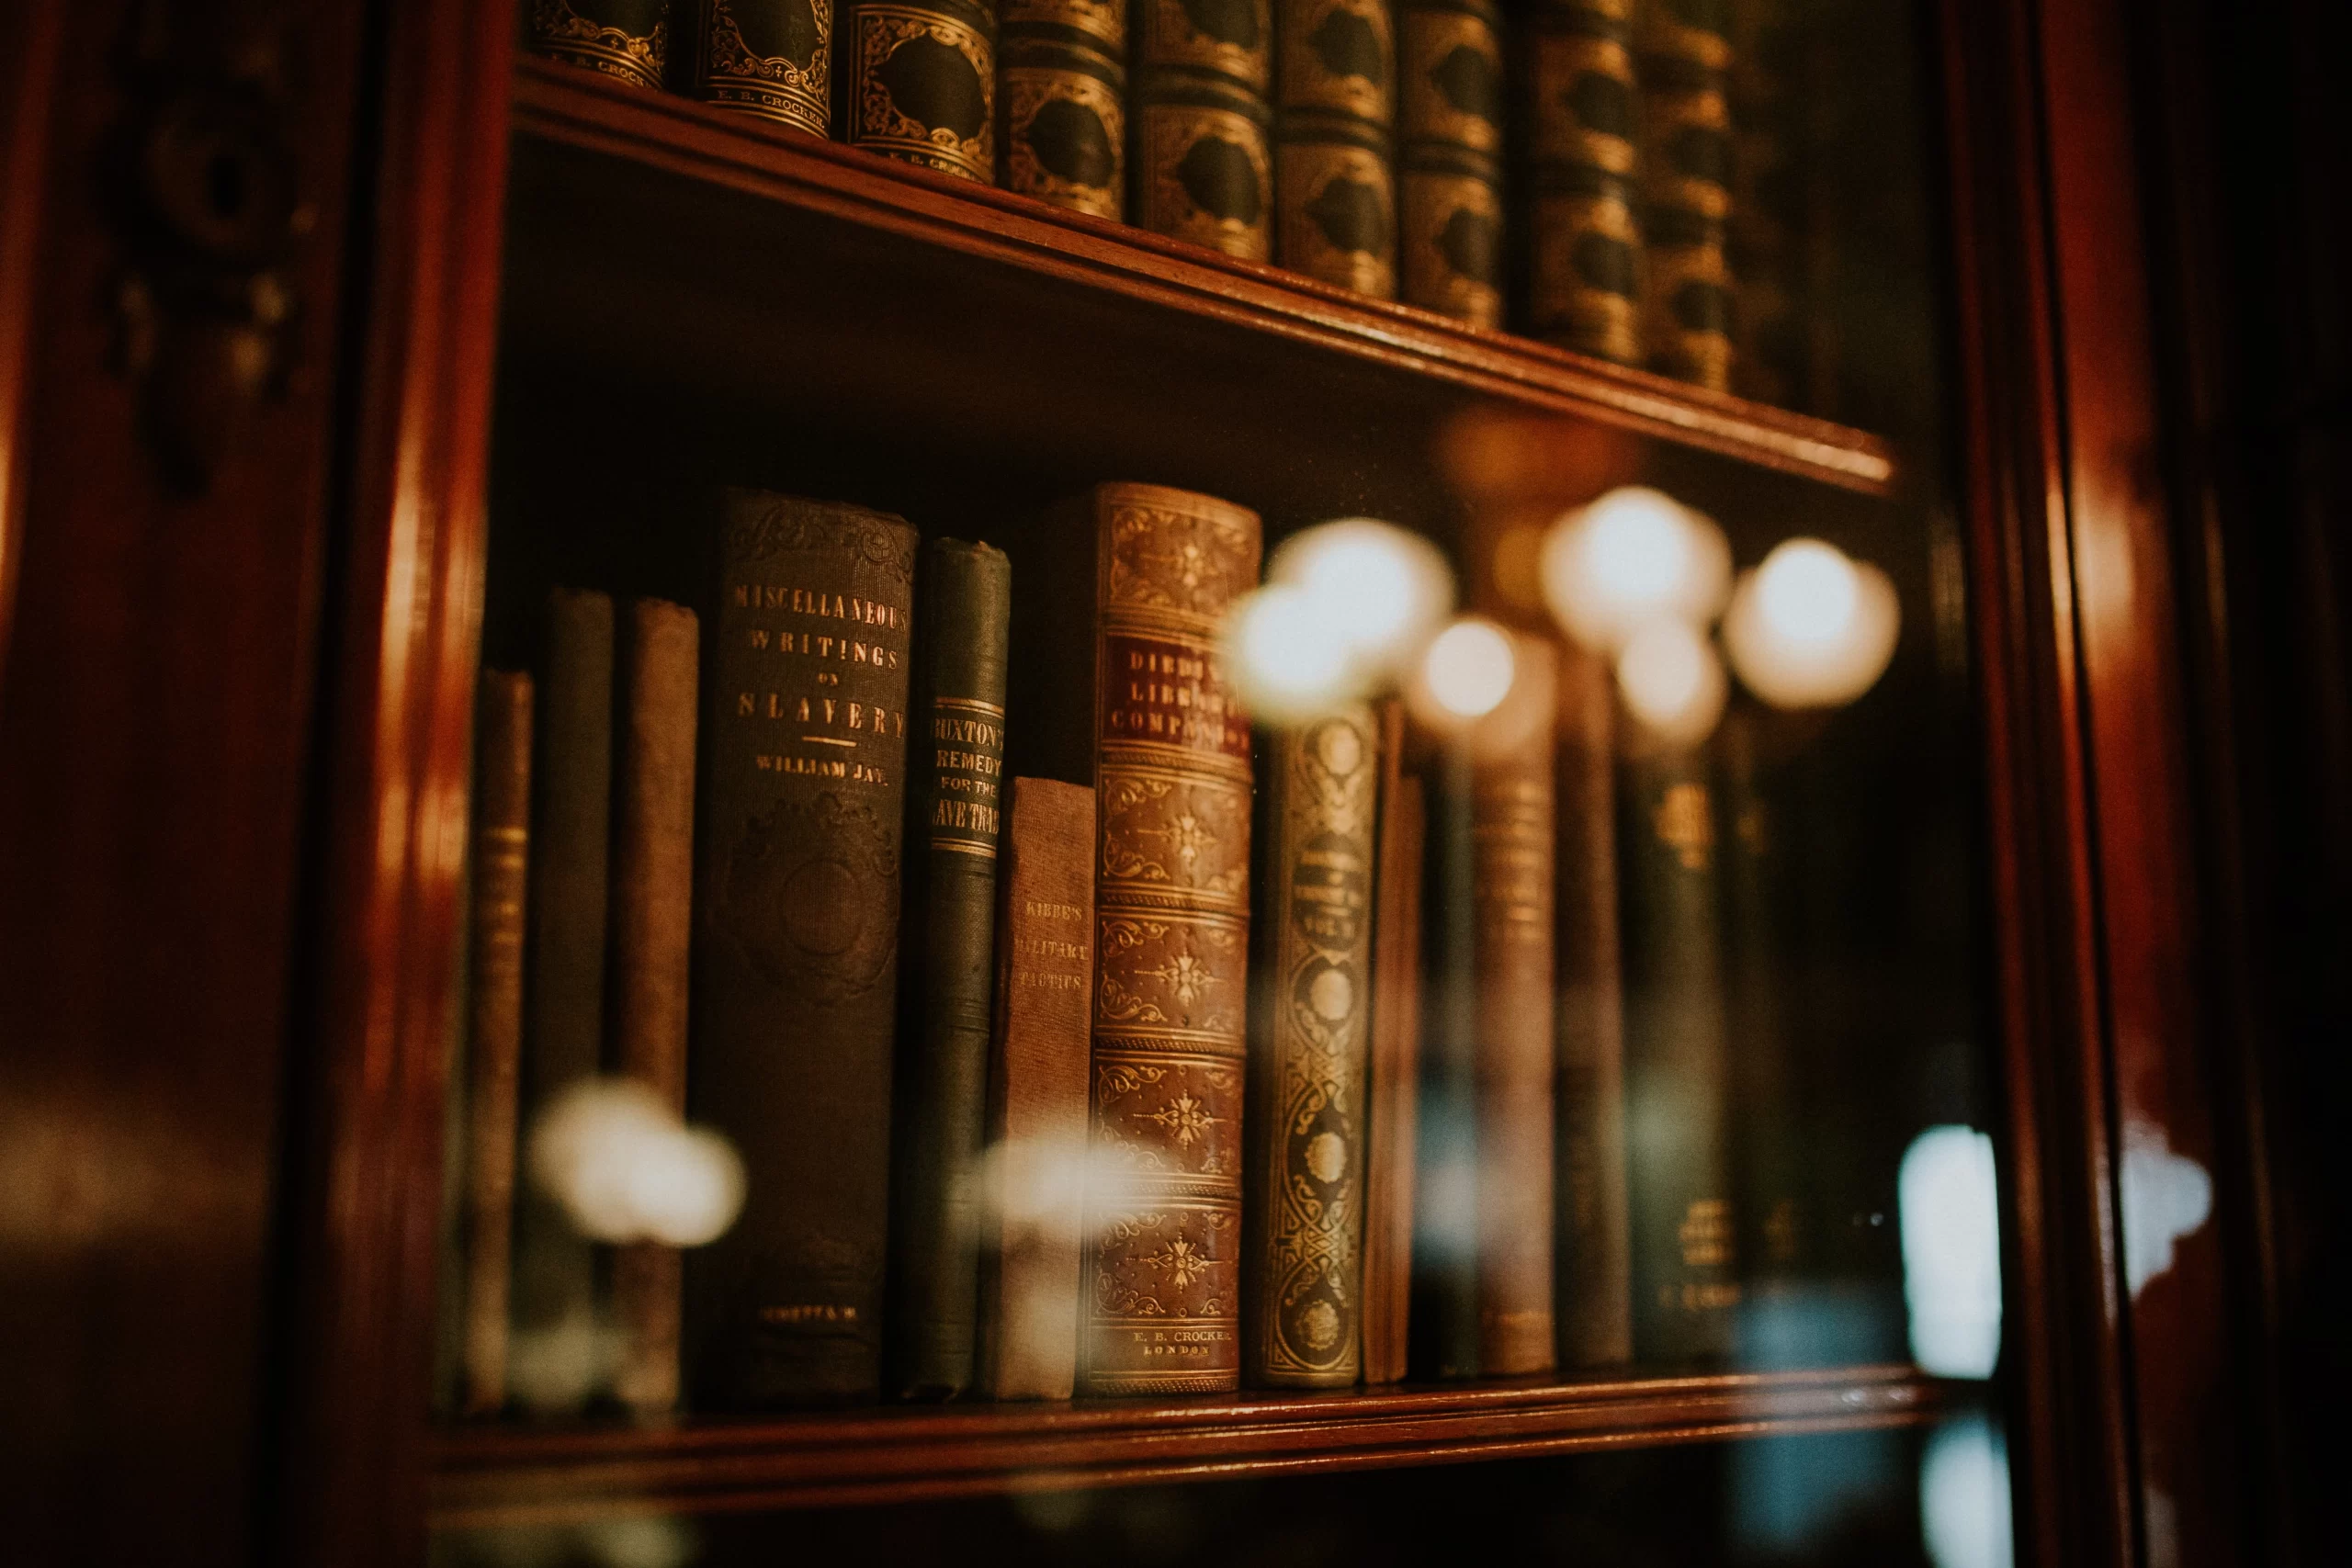 clarisse-meyer-Law library bookshelves at night-unsplash